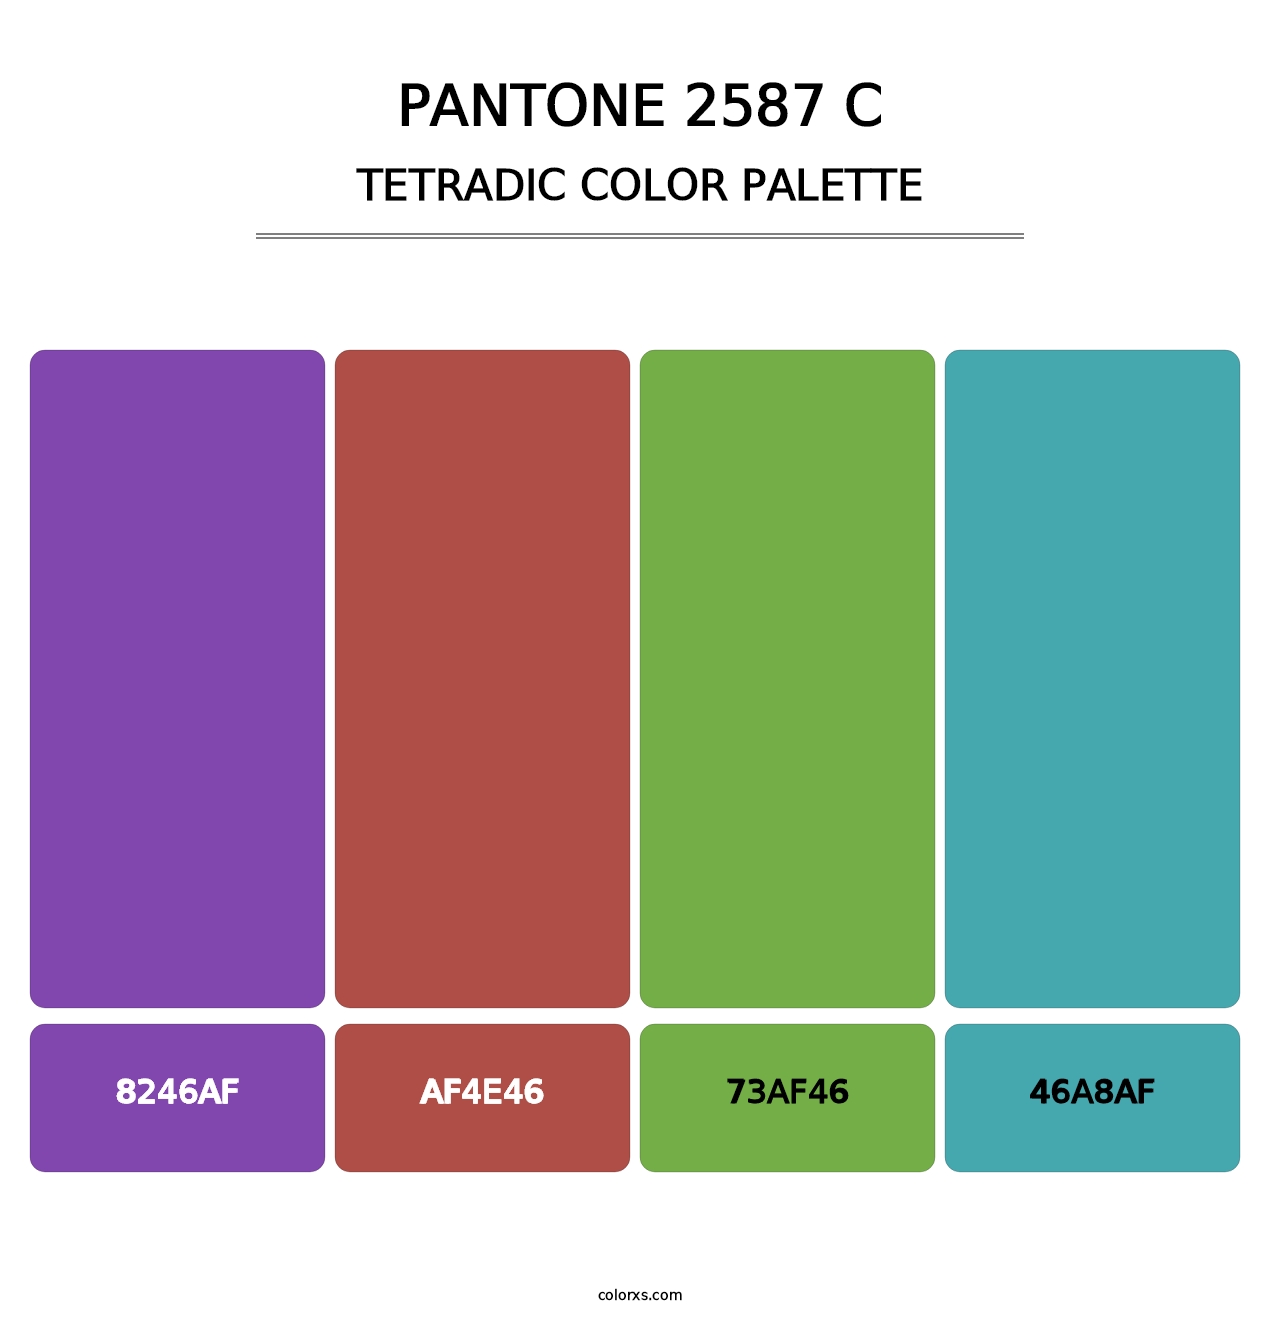 PANTONE 2587 C - Tetradic Color Palette